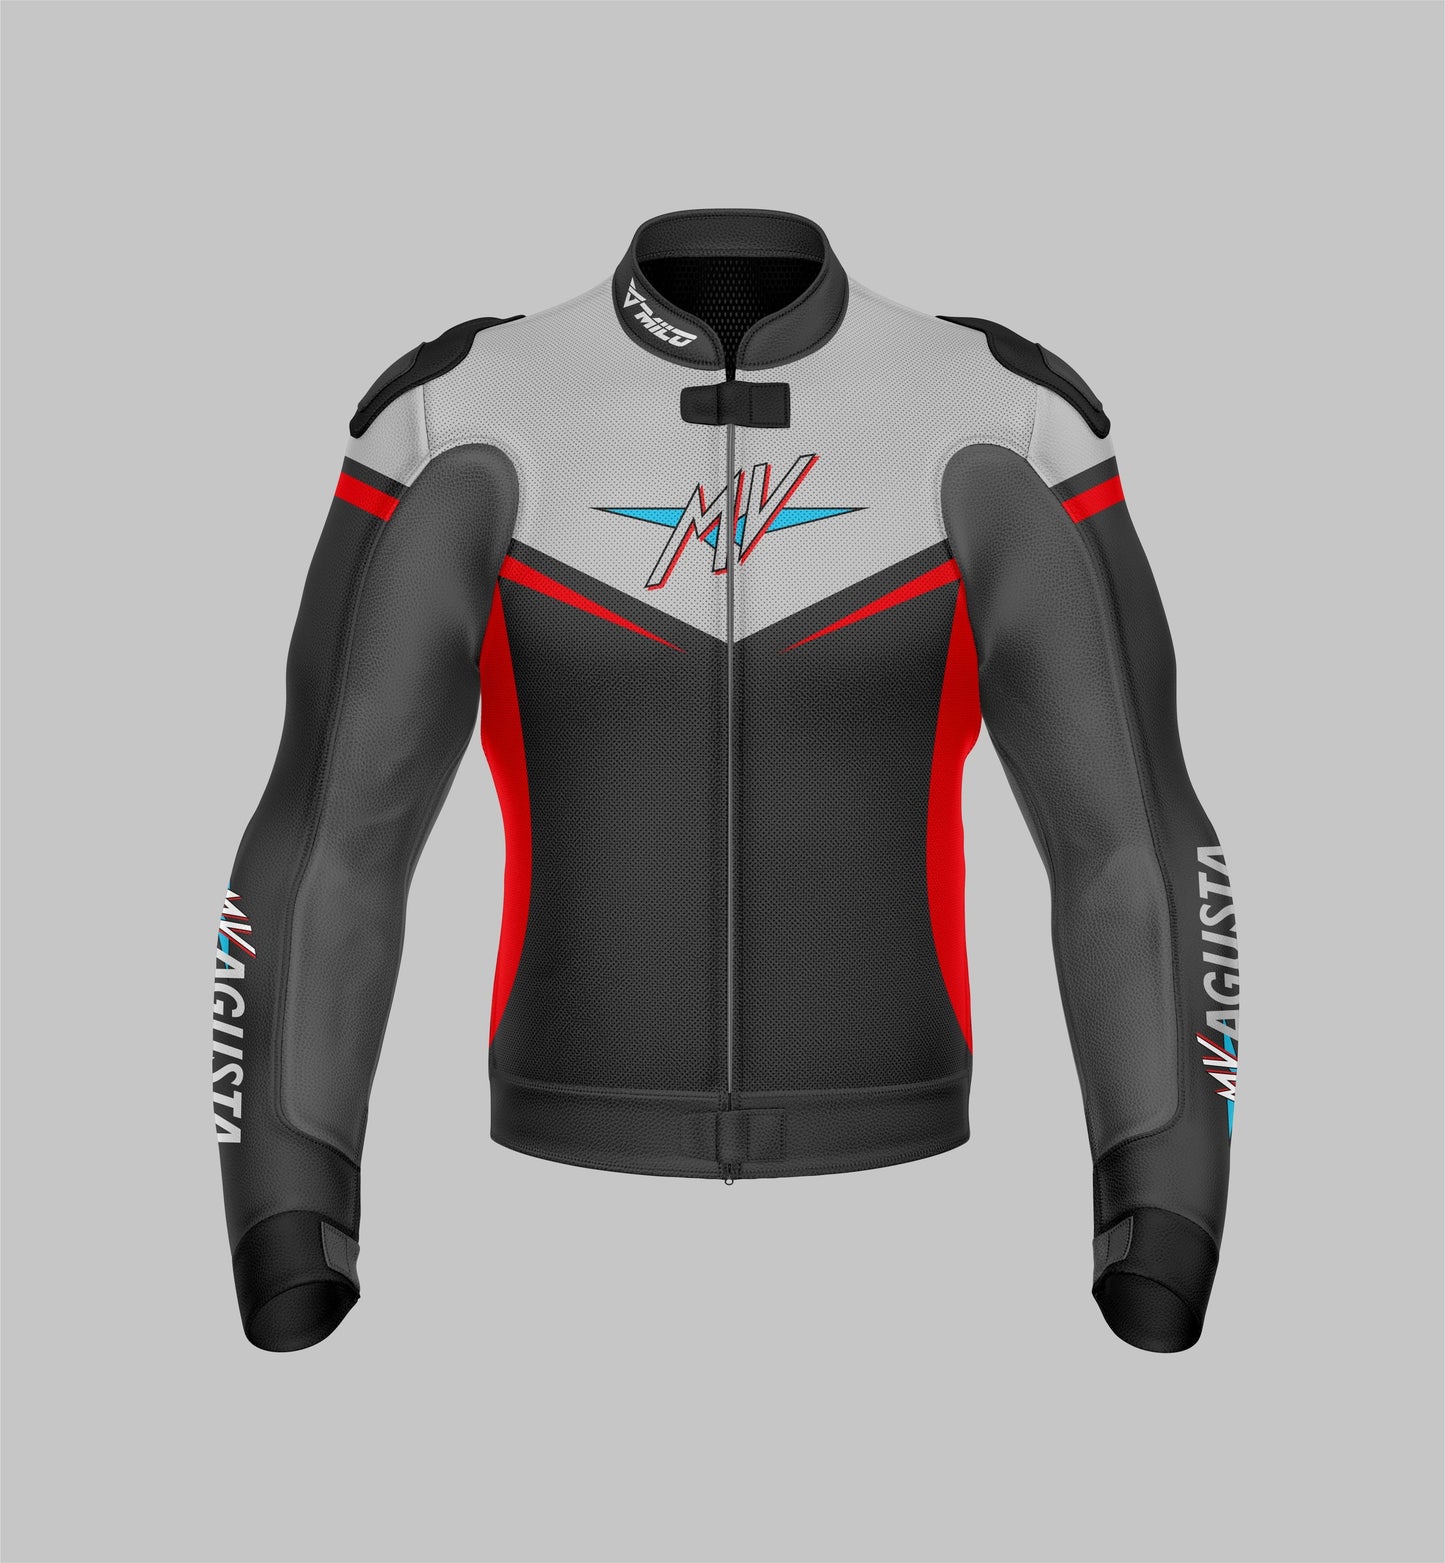 Made to Perfection: Custom Racing Biker Jacket